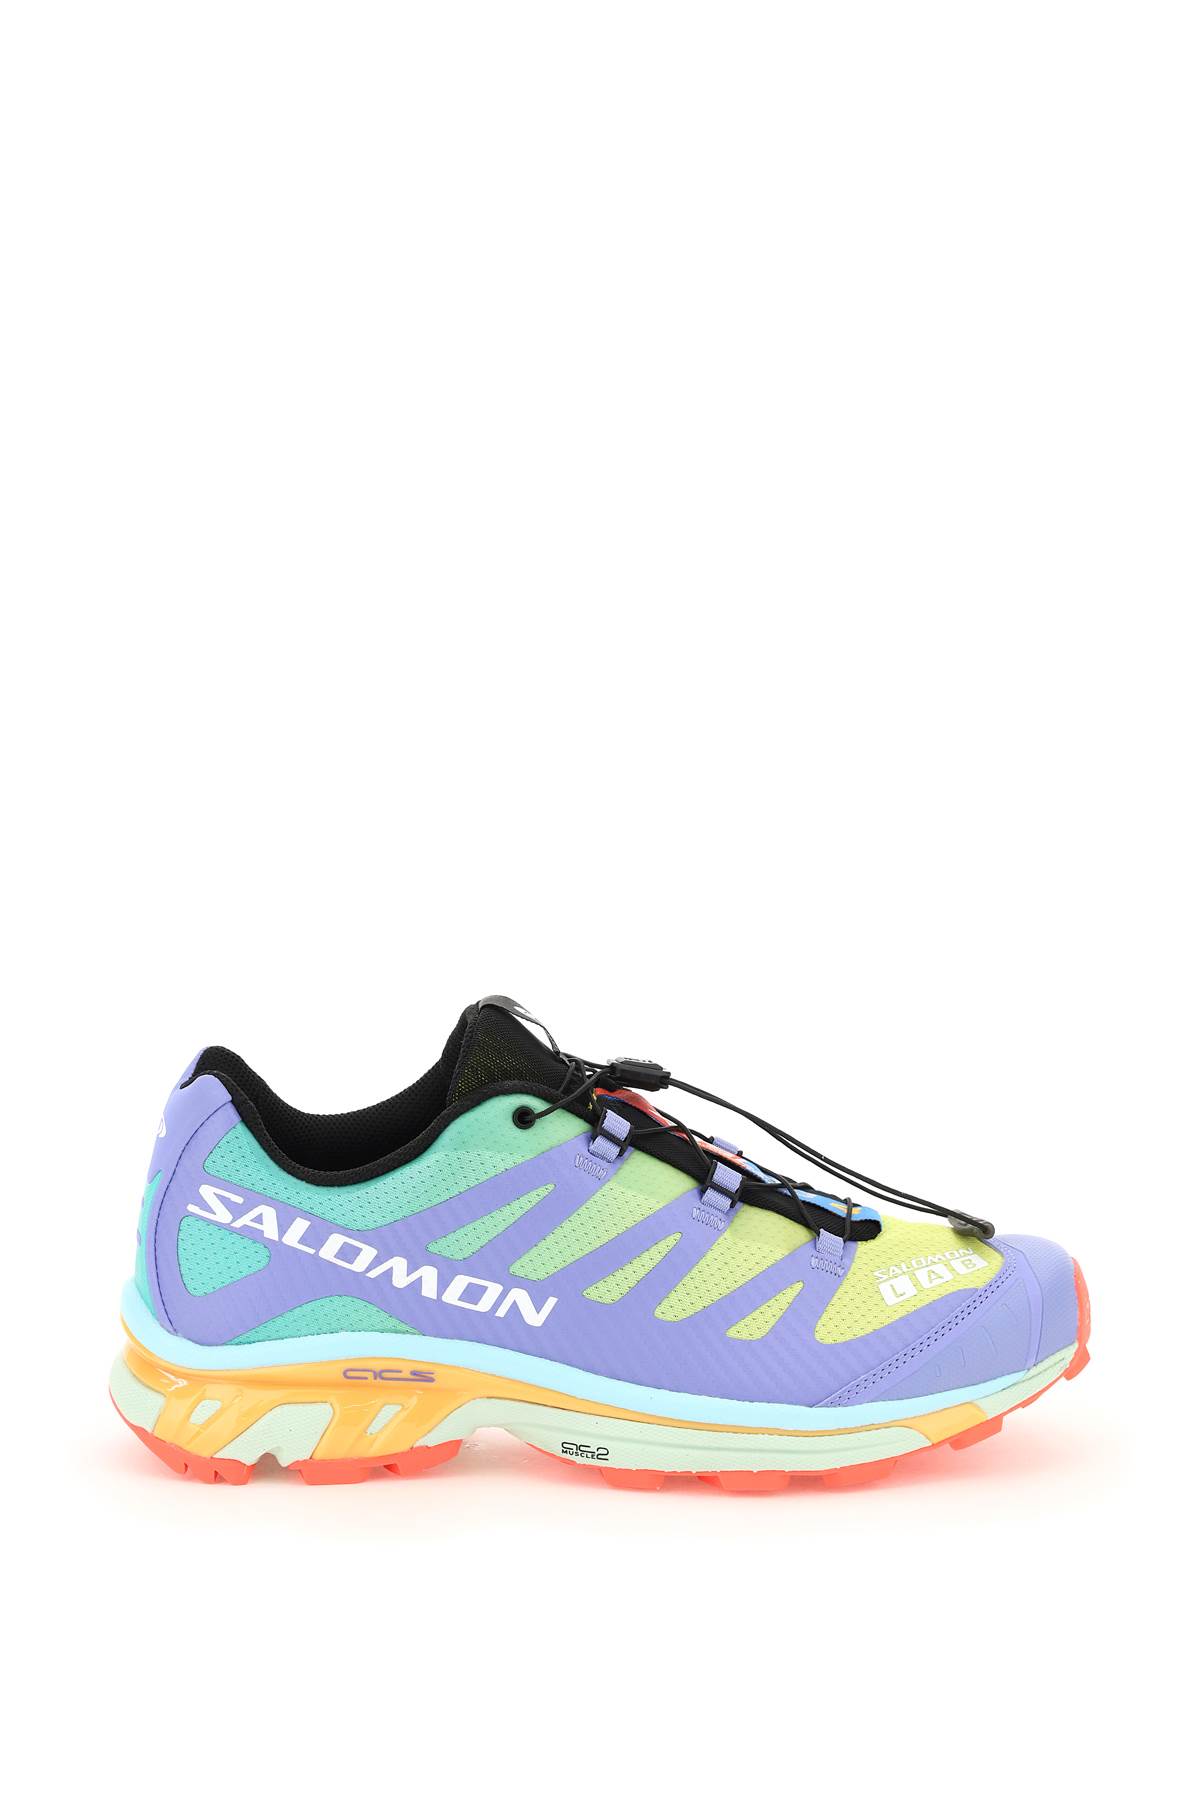 Salomon Xt-4 Running Trail Shoes